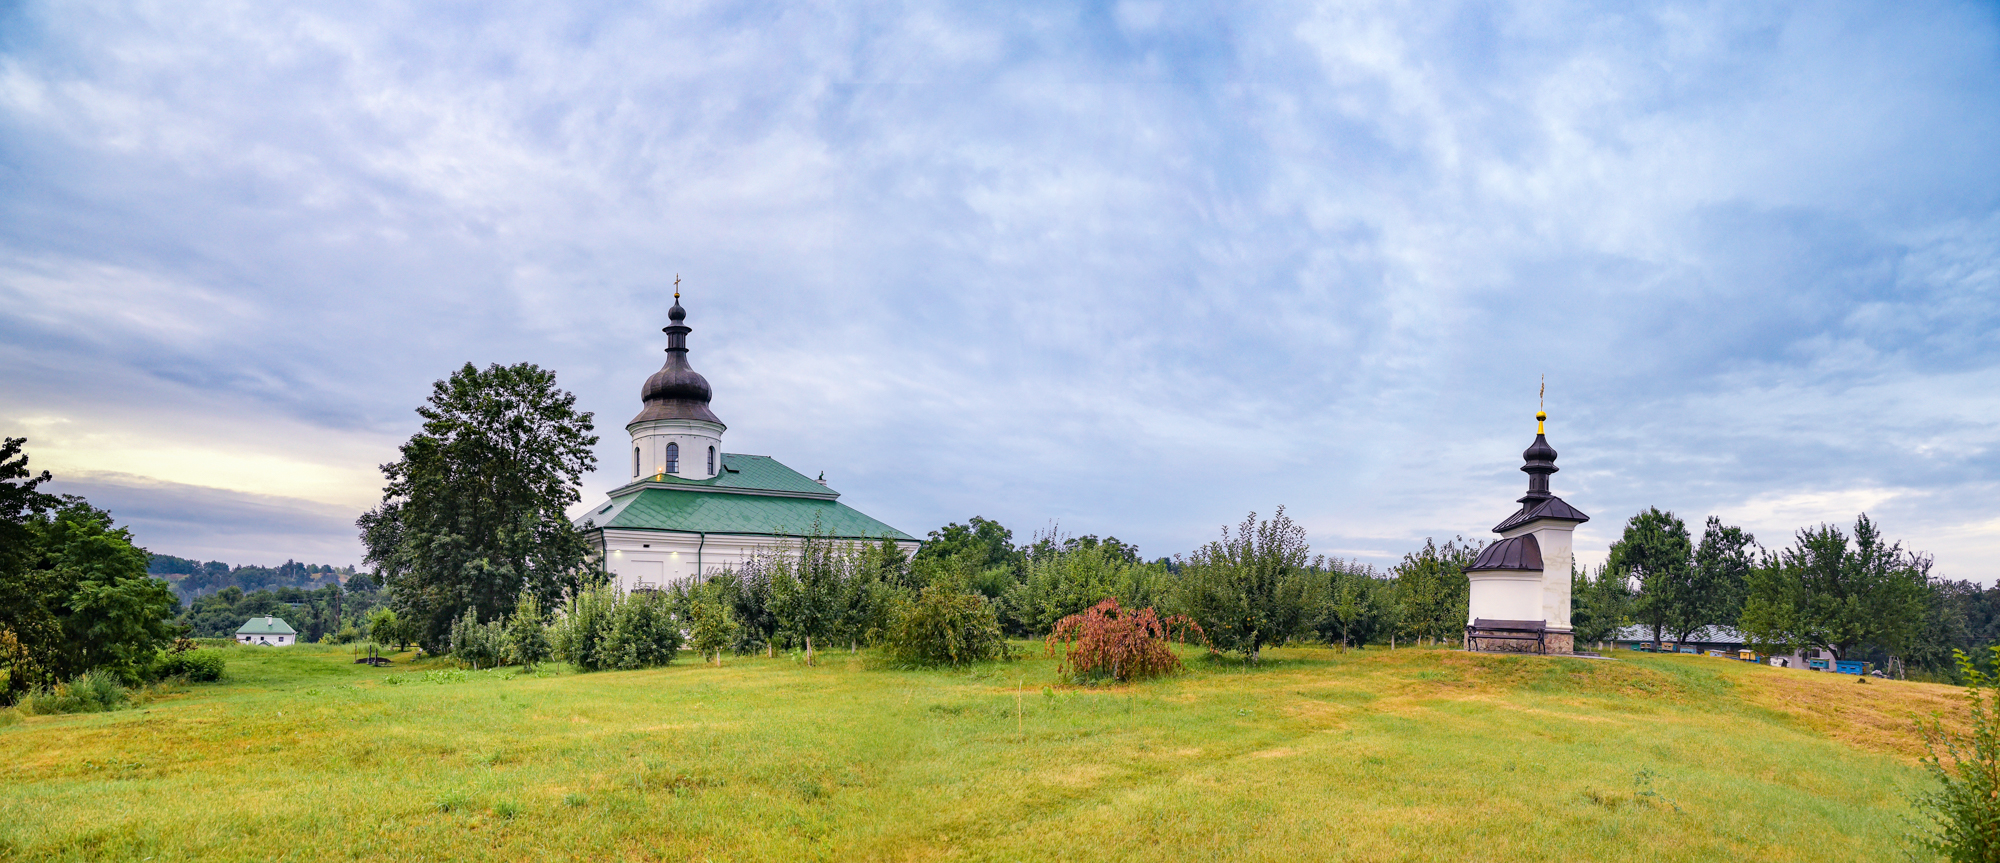 best photo nescherovo monastery 013